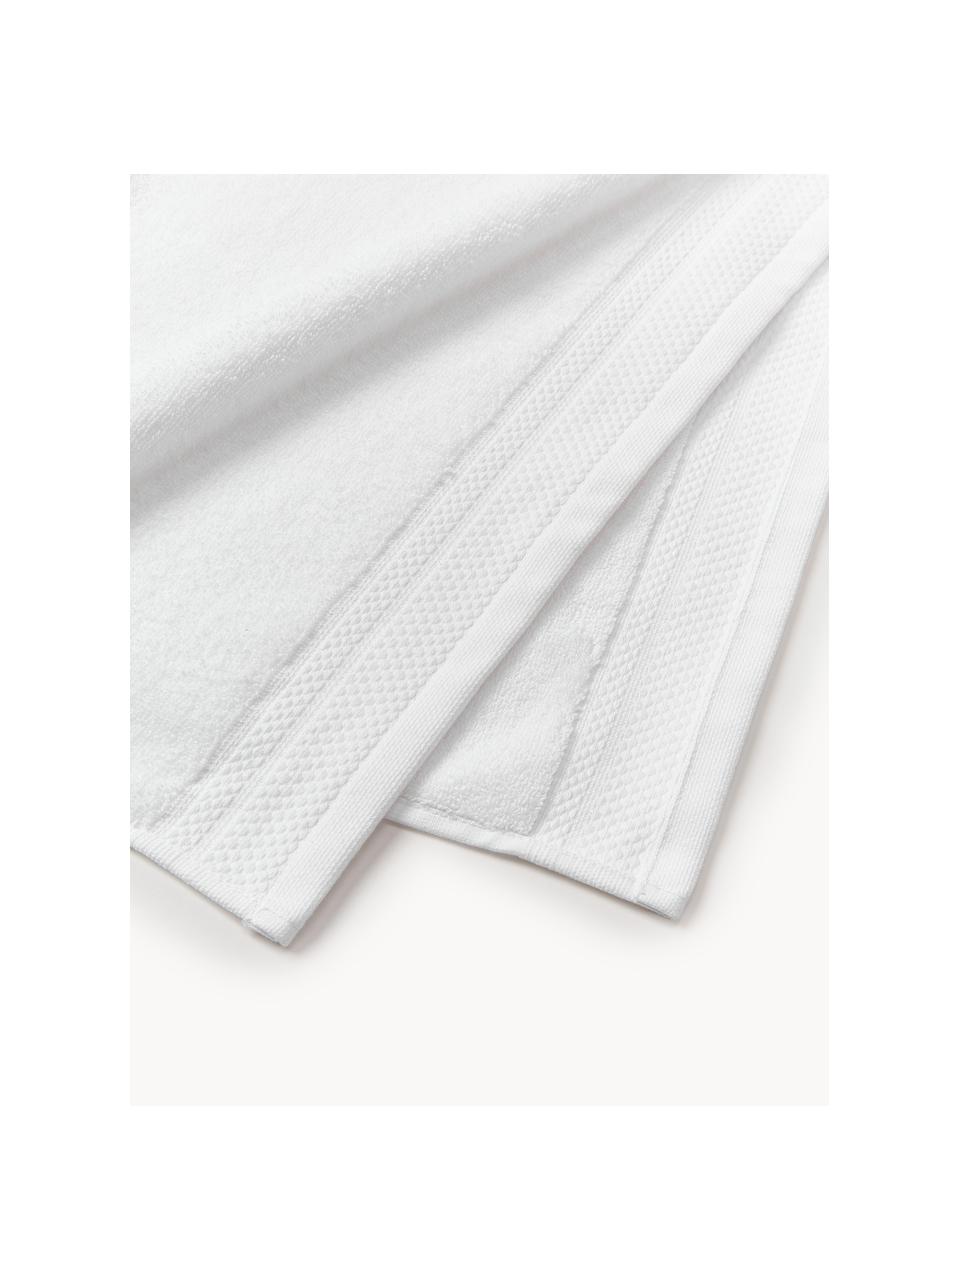 Set di asciugamani in cotone organico Premium, varie misure, 100% cotone organico certificato GOTS (da GCL International, GCL-300517).
Qualità pesante, 600 g/m², Bianco, Set di 4 (asciugamano e telo da bagno)